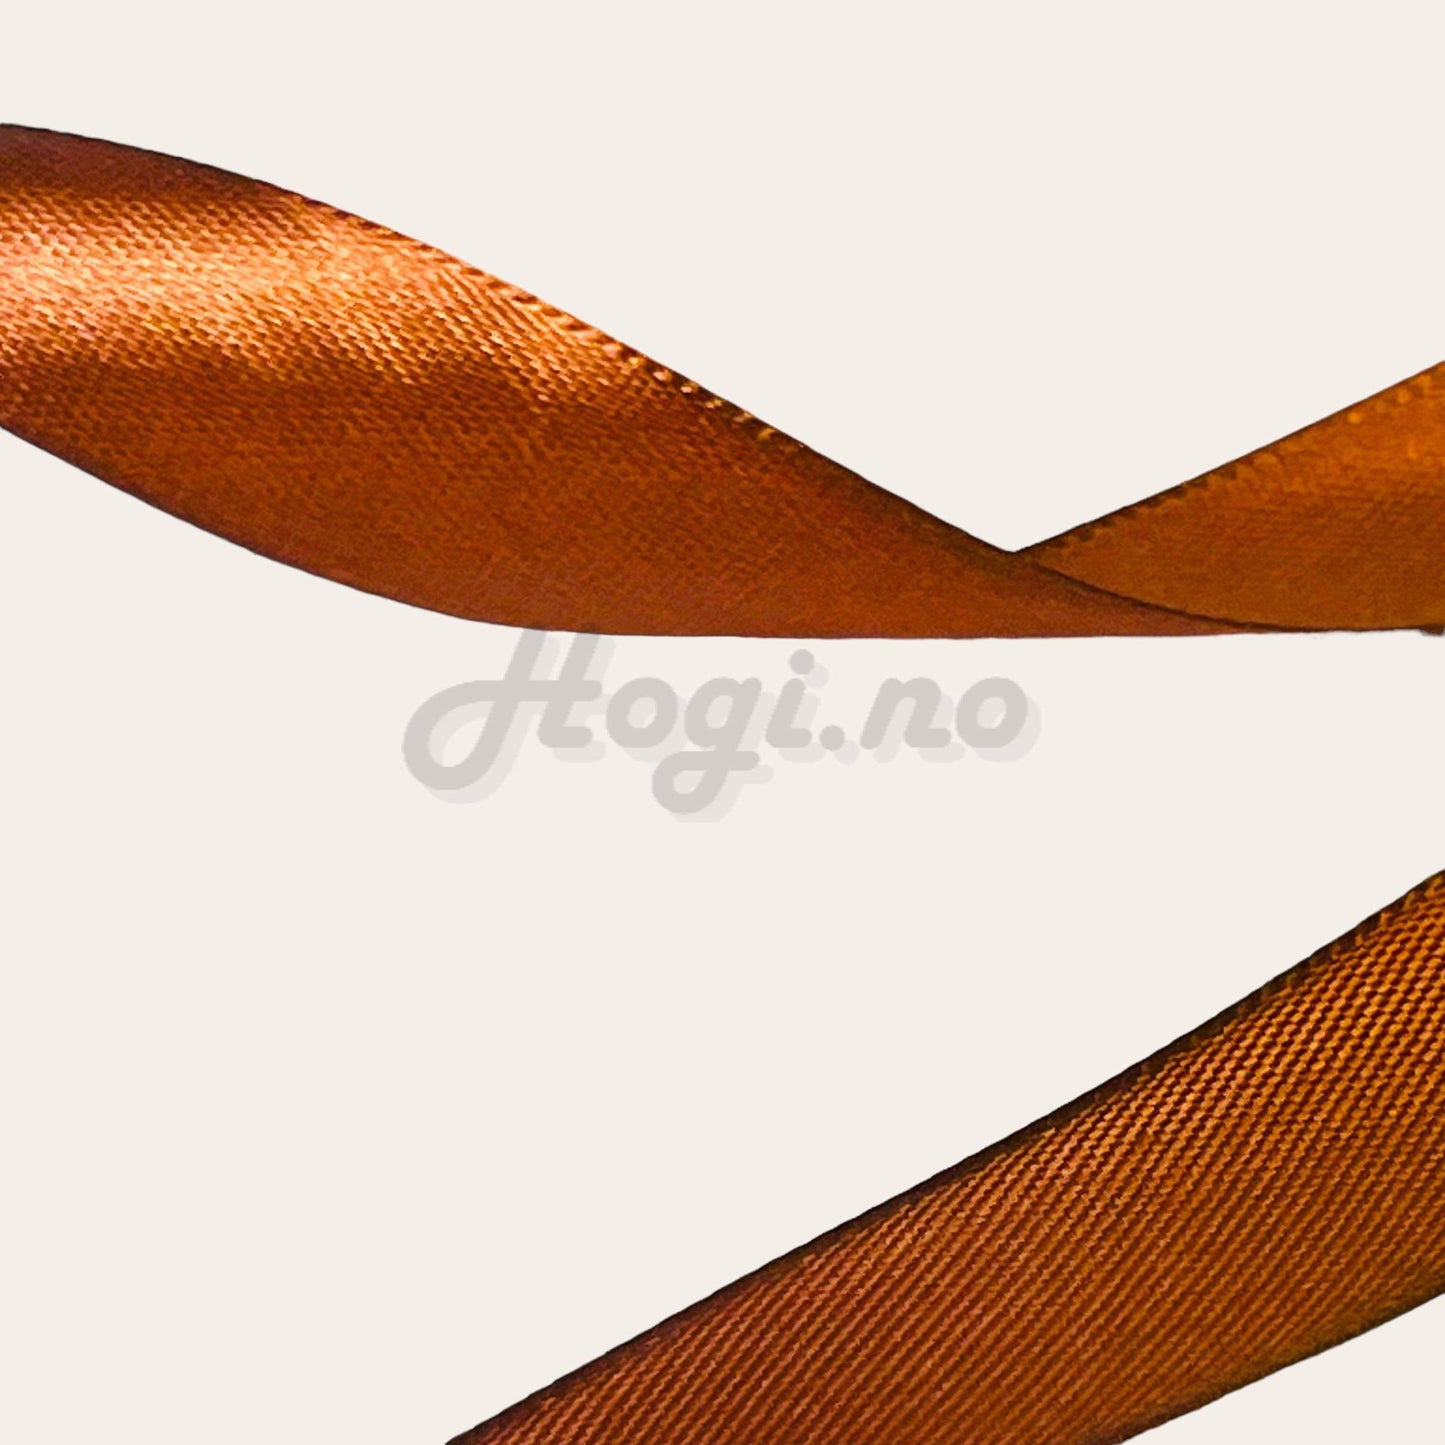 Silkebånd - kastanje brun / chestnut brown